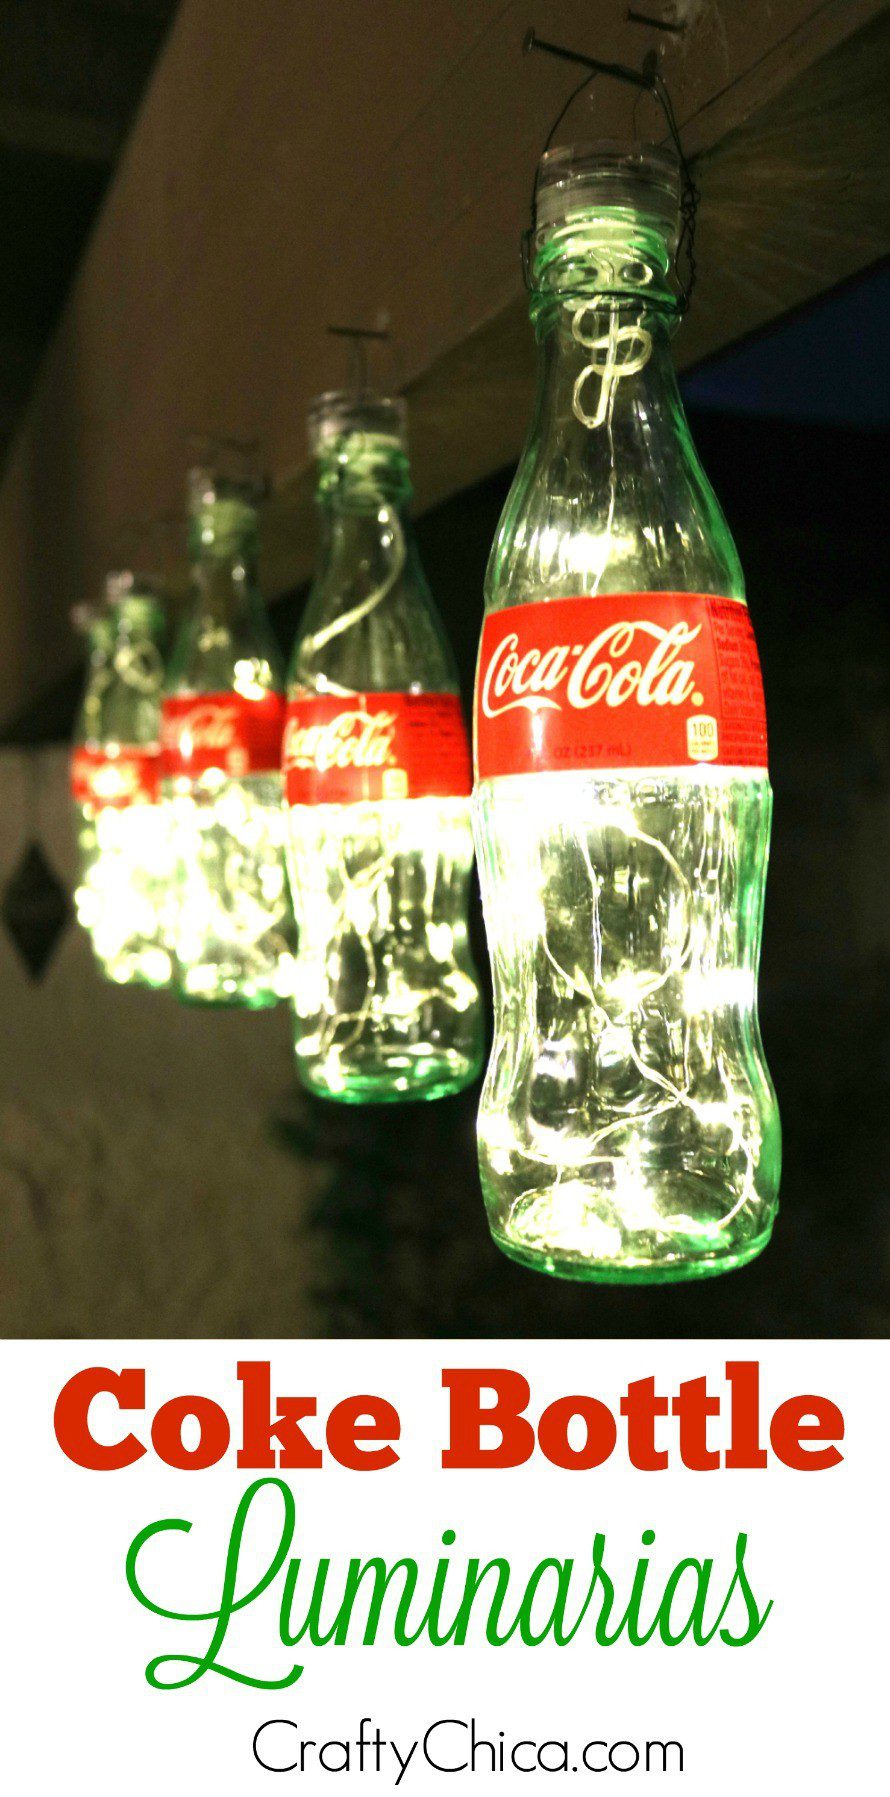 Coke-Bottle-Luminarias890a